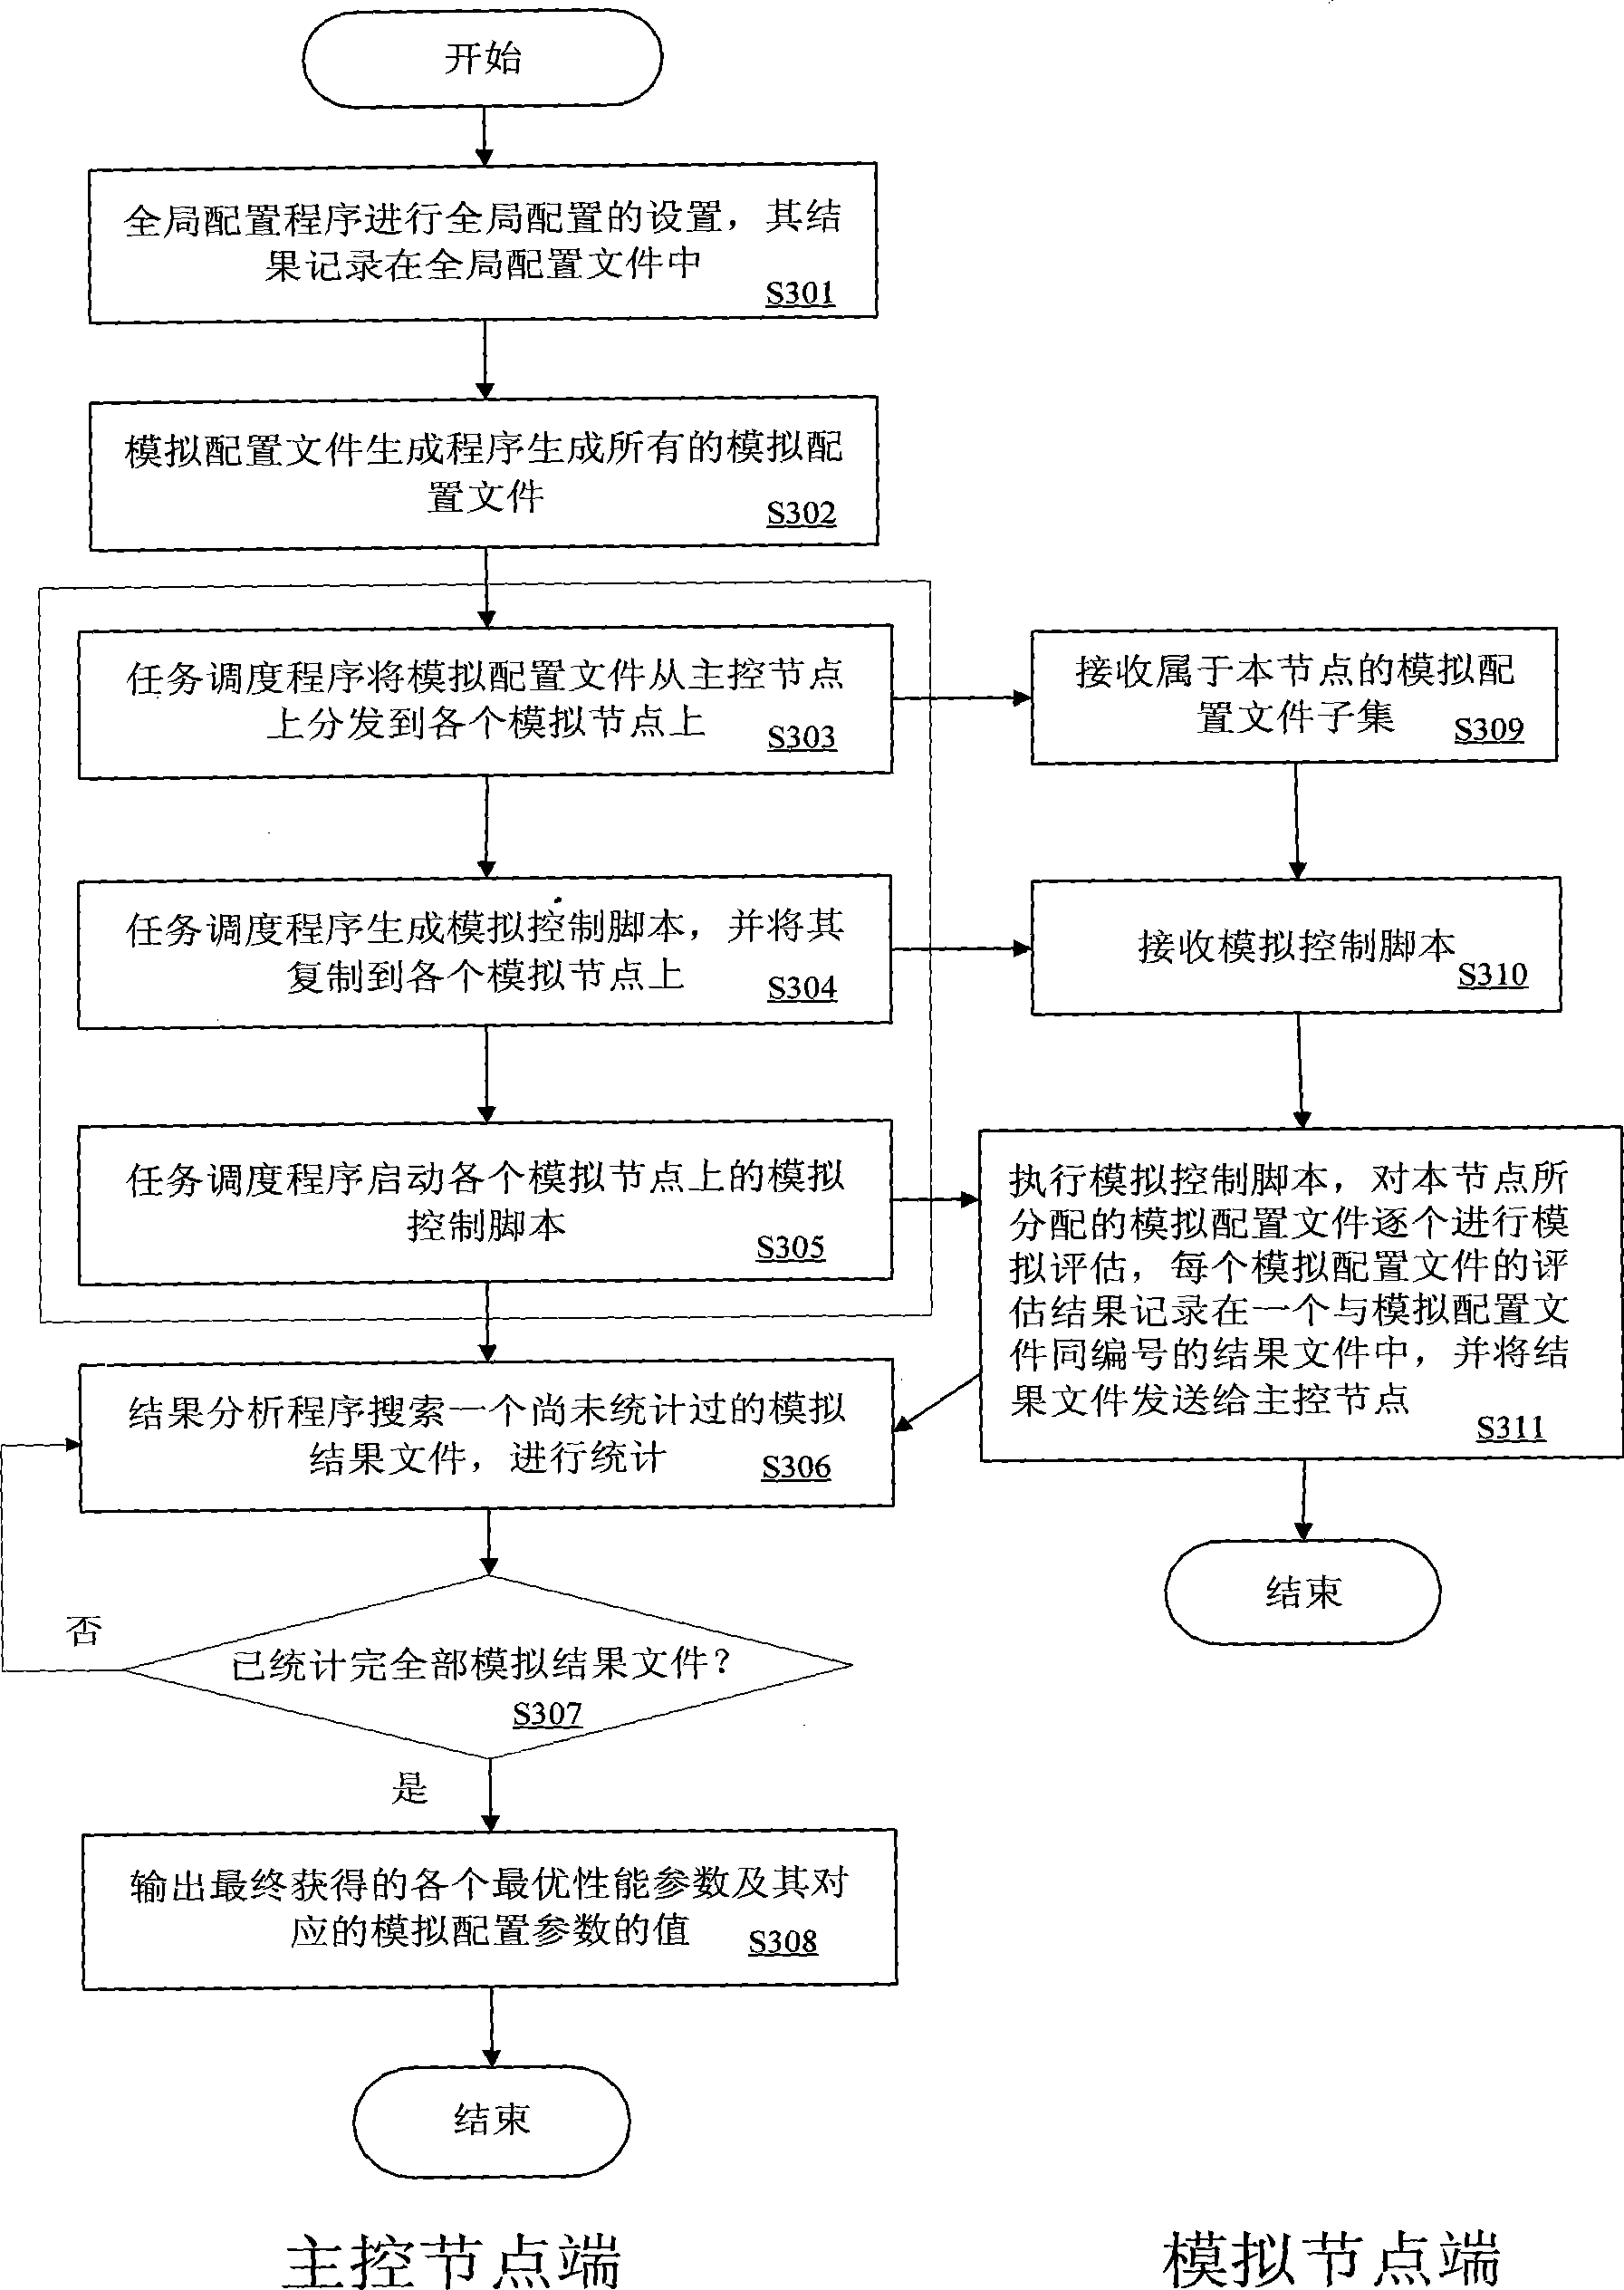 Computer architecture scheme parallel simulation optimization method based on cluster system